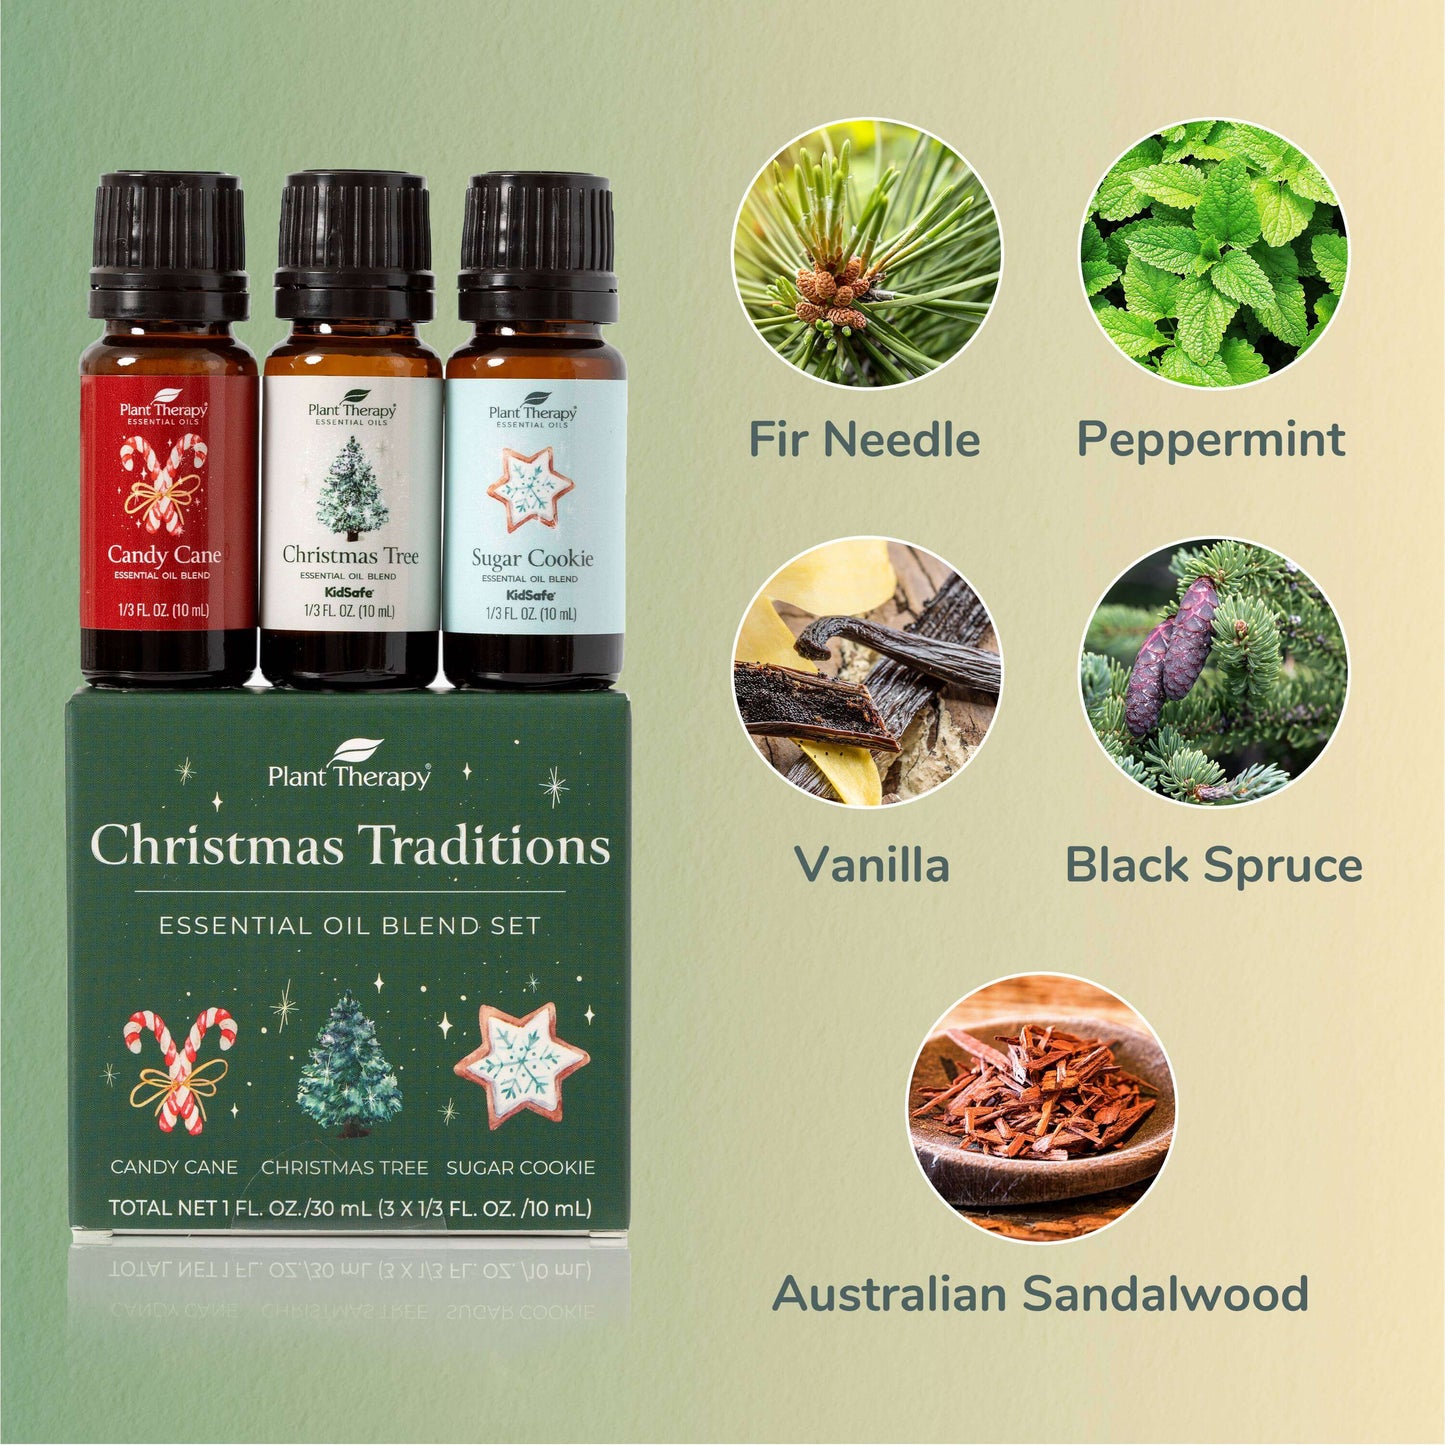 Fir Needle, Peppermint, Vanilla, Black Spruce, Sandalwood